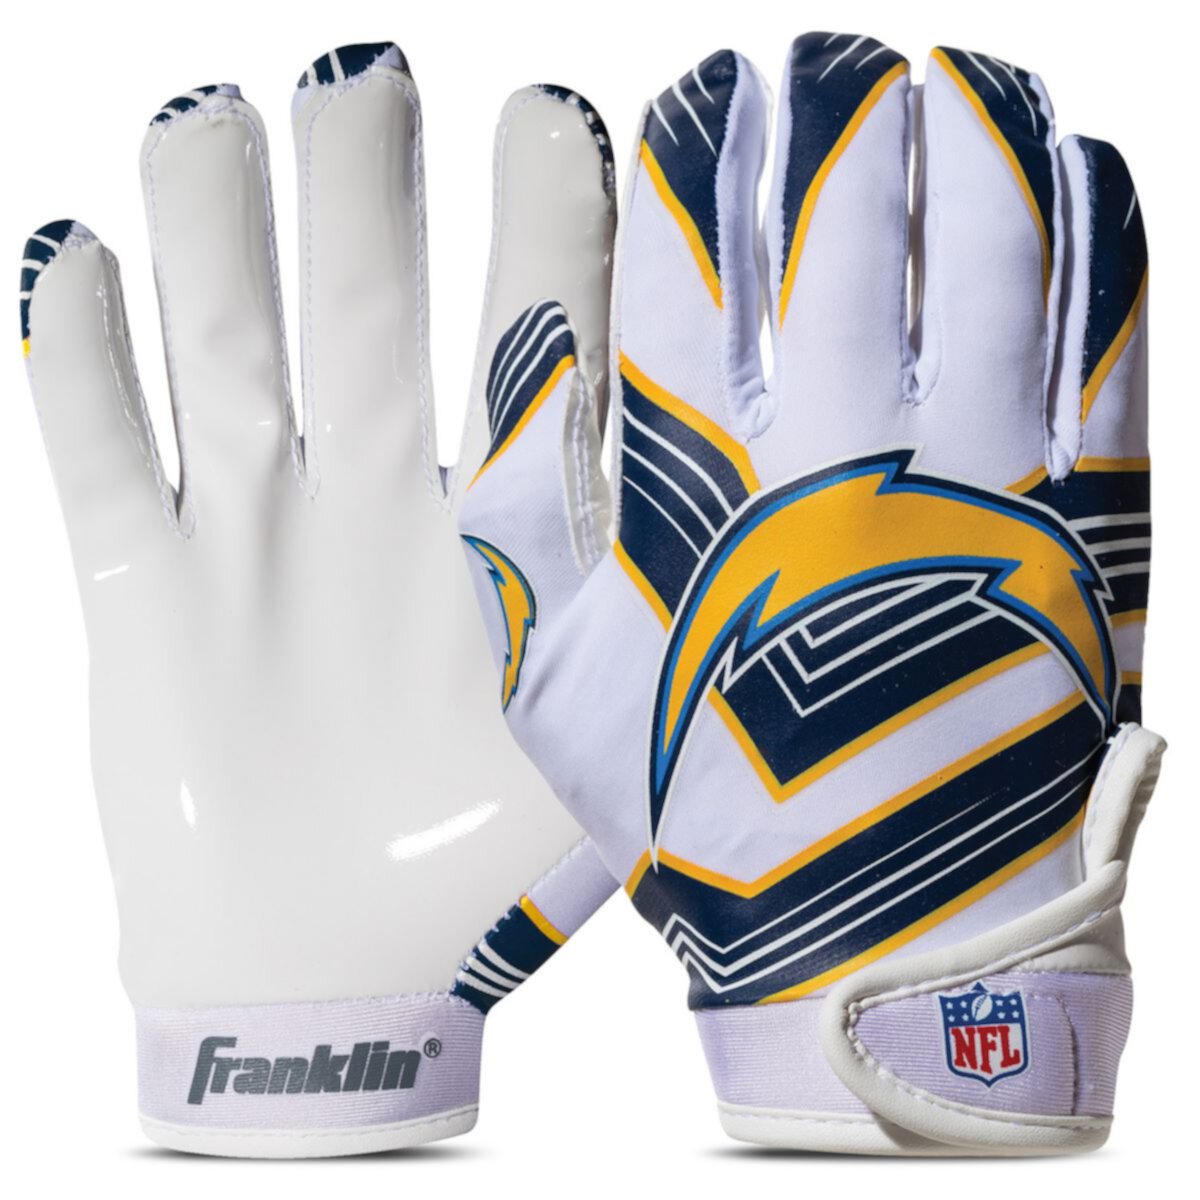 Футбольные перчатки Franklin Sports Los Angeles Chargers Молодежные футбольные перчатки НФЛ Franklin Sports